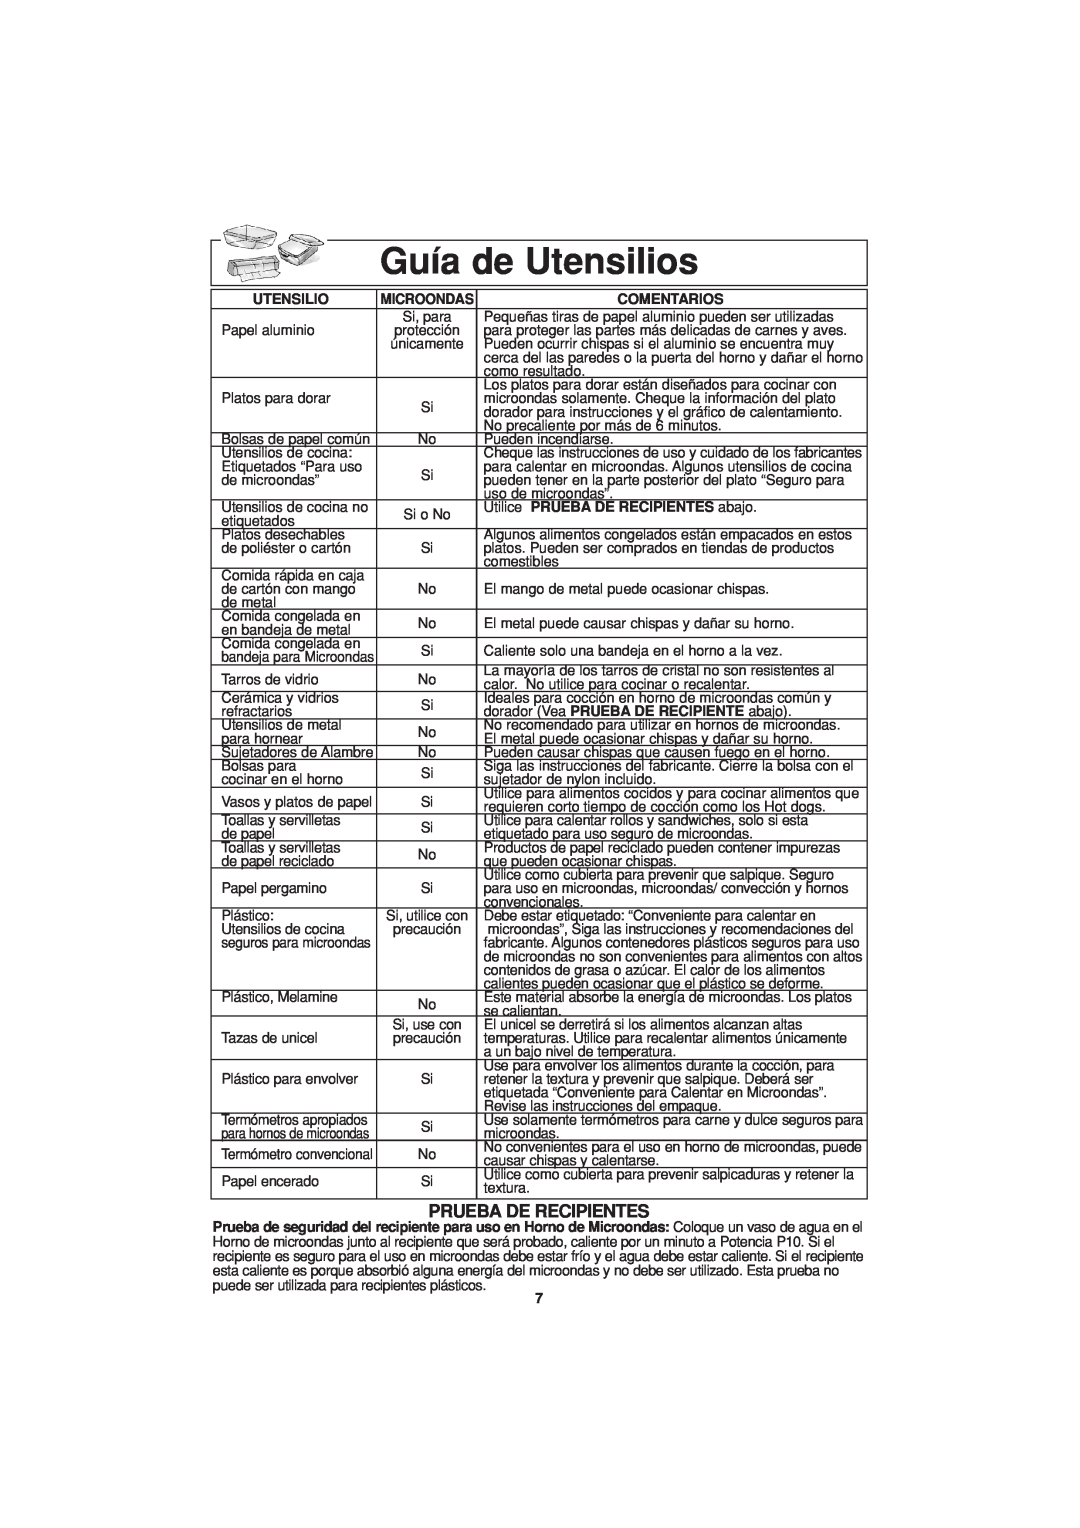 Panasonic NN-H614, NN-H604, NN-H504 important safety instructions Guía de Utensilios, Prueba De Recipientes 